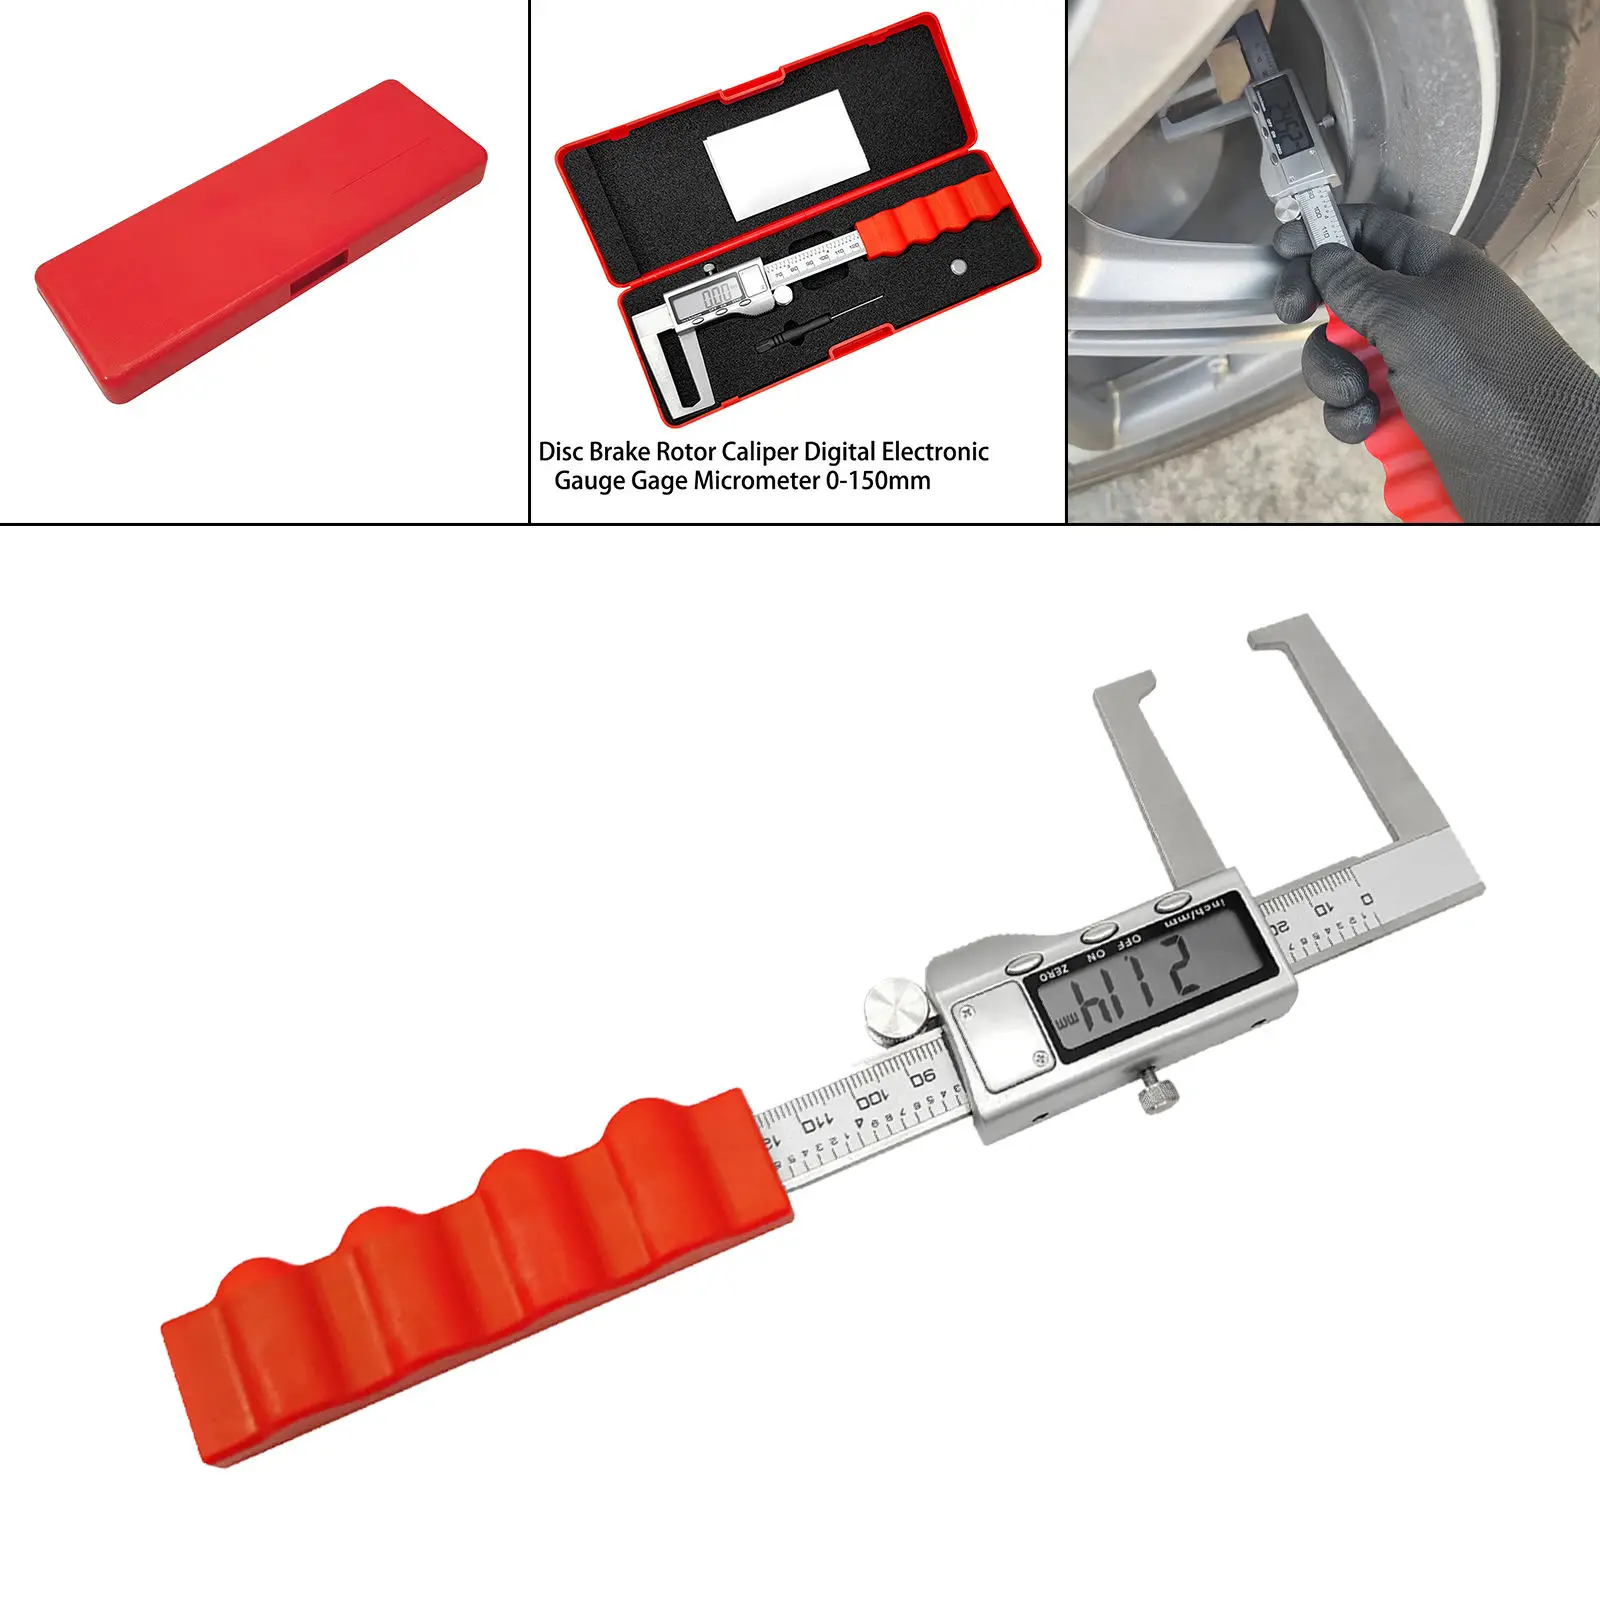 Brake Discs Vernier Caliper Digital Electronic Gauge Measuring Tool Micrometer 0-150mm